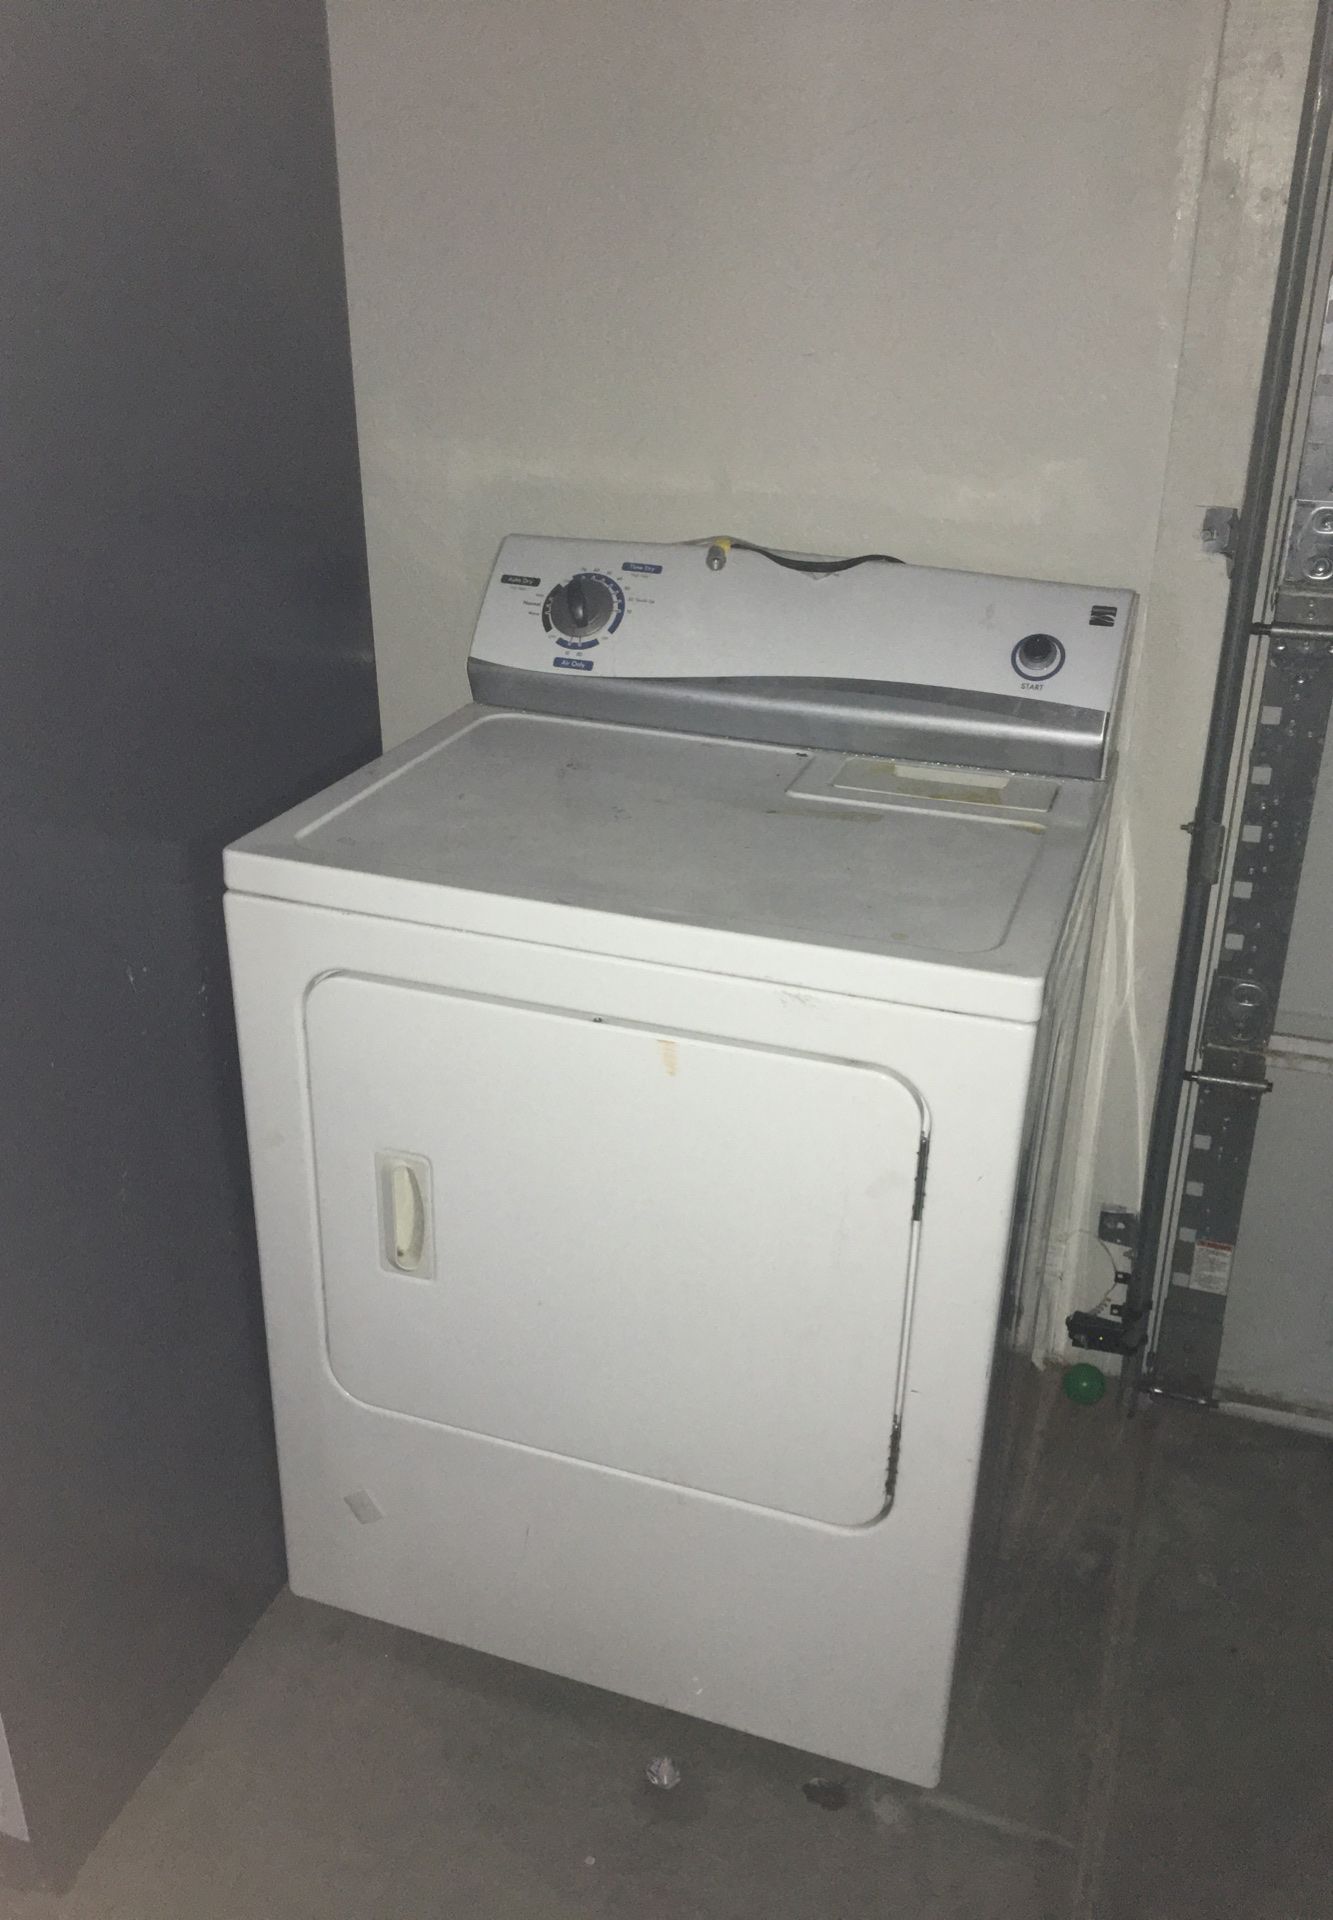 Kenmore gas dryer